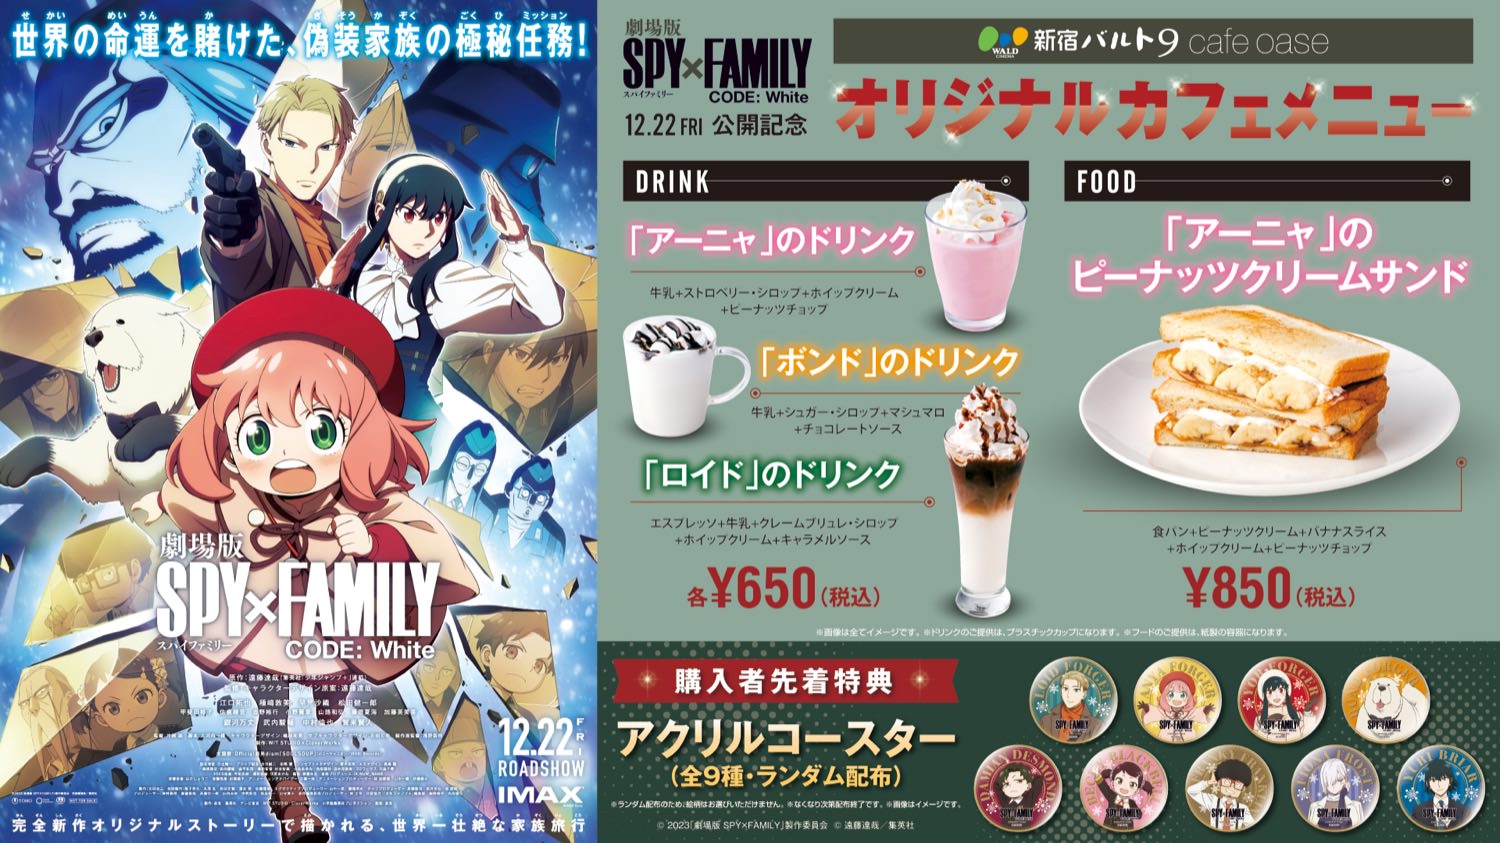 Movie Spy Family Cafe in Shinjuku and Yokohama – Anime Maps